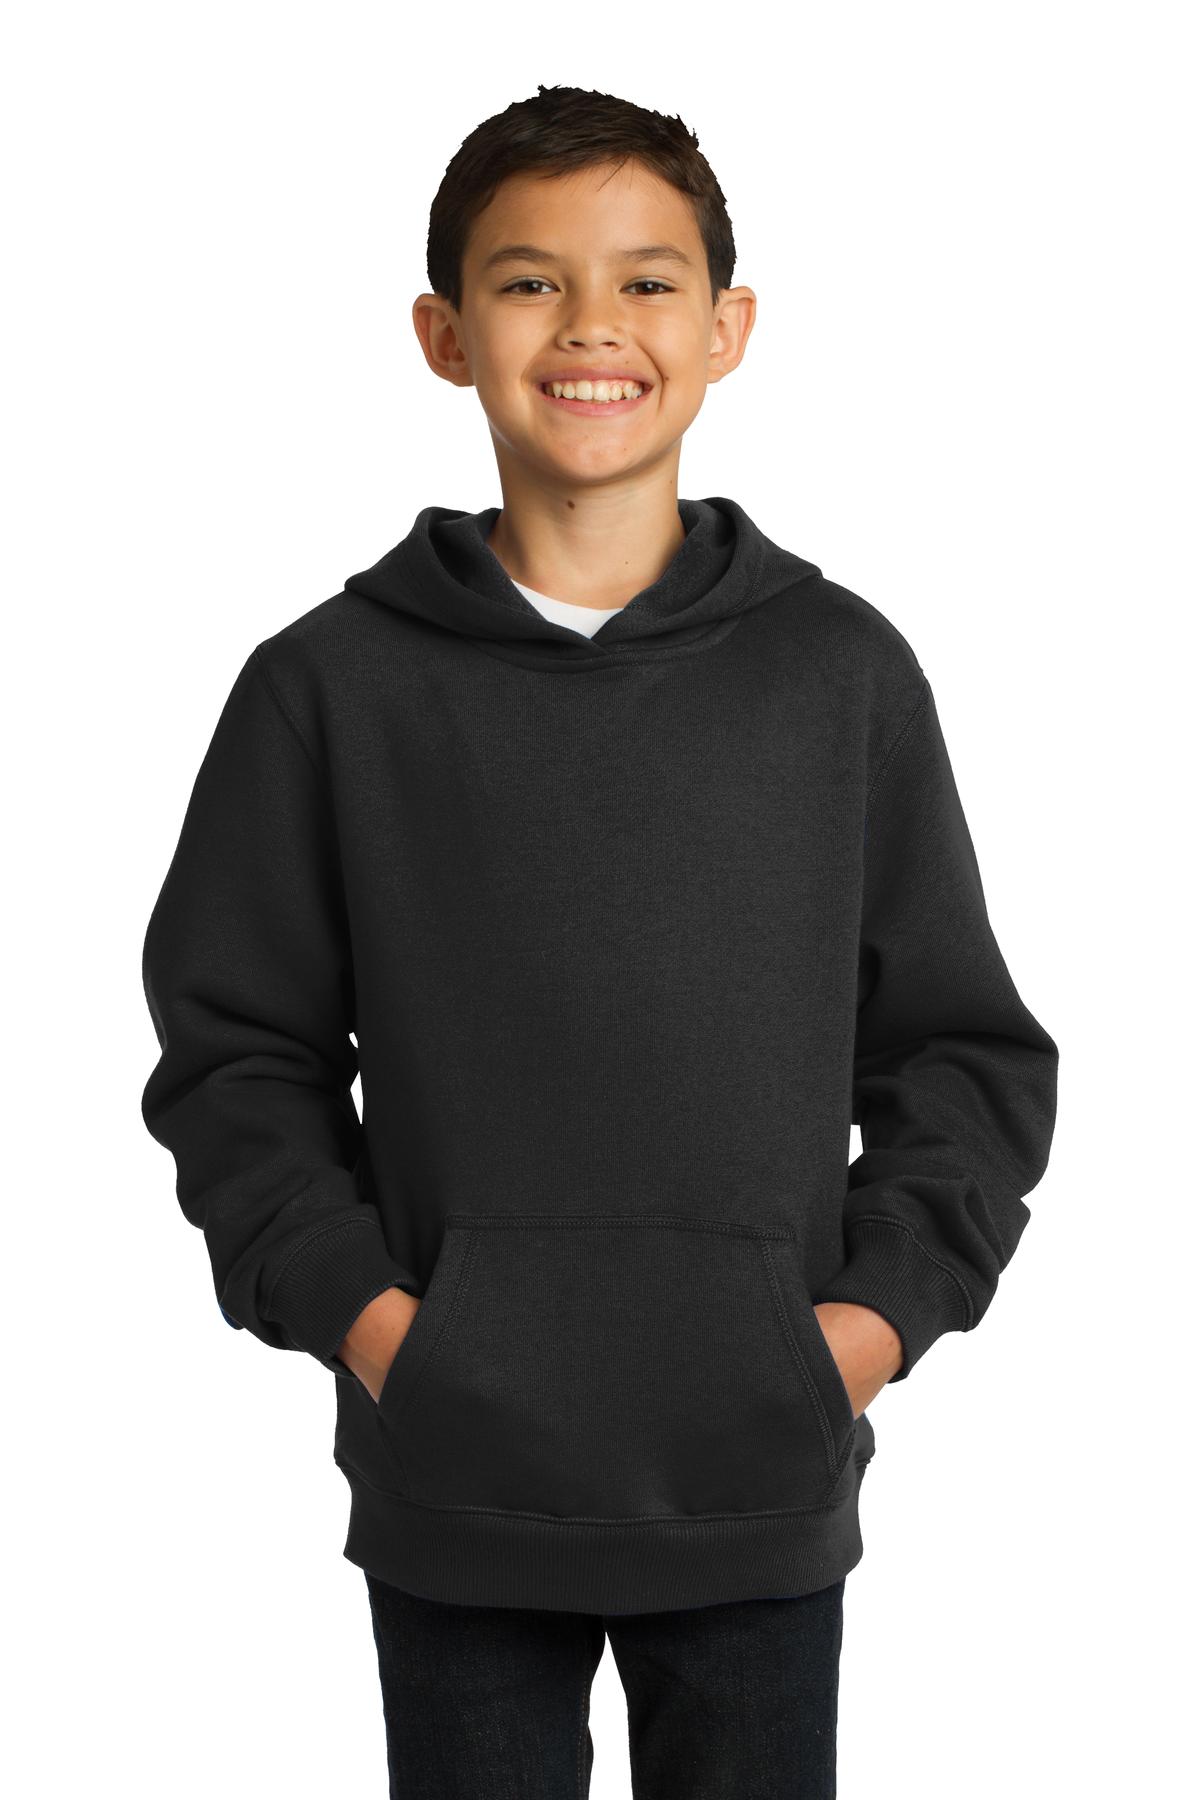 Sport-Tek Youth Sweatshirts & Fleece for Hospitality ® Youth Pullover Hooded Sweatshirt.-Sport-Tek